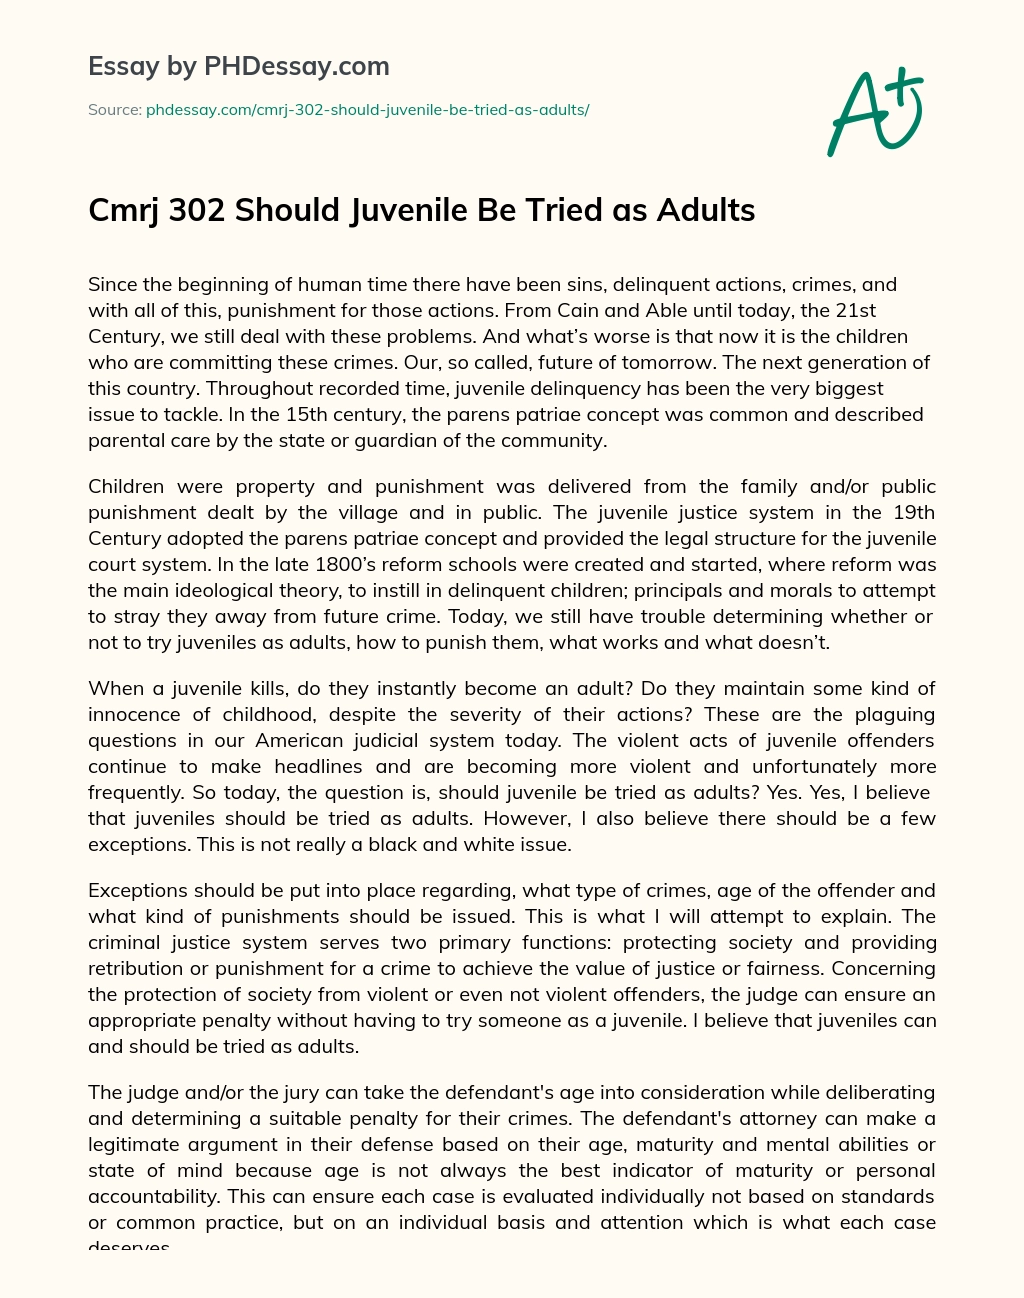 Cmrj 302 Should Juvenile Be Tried as Adults essay